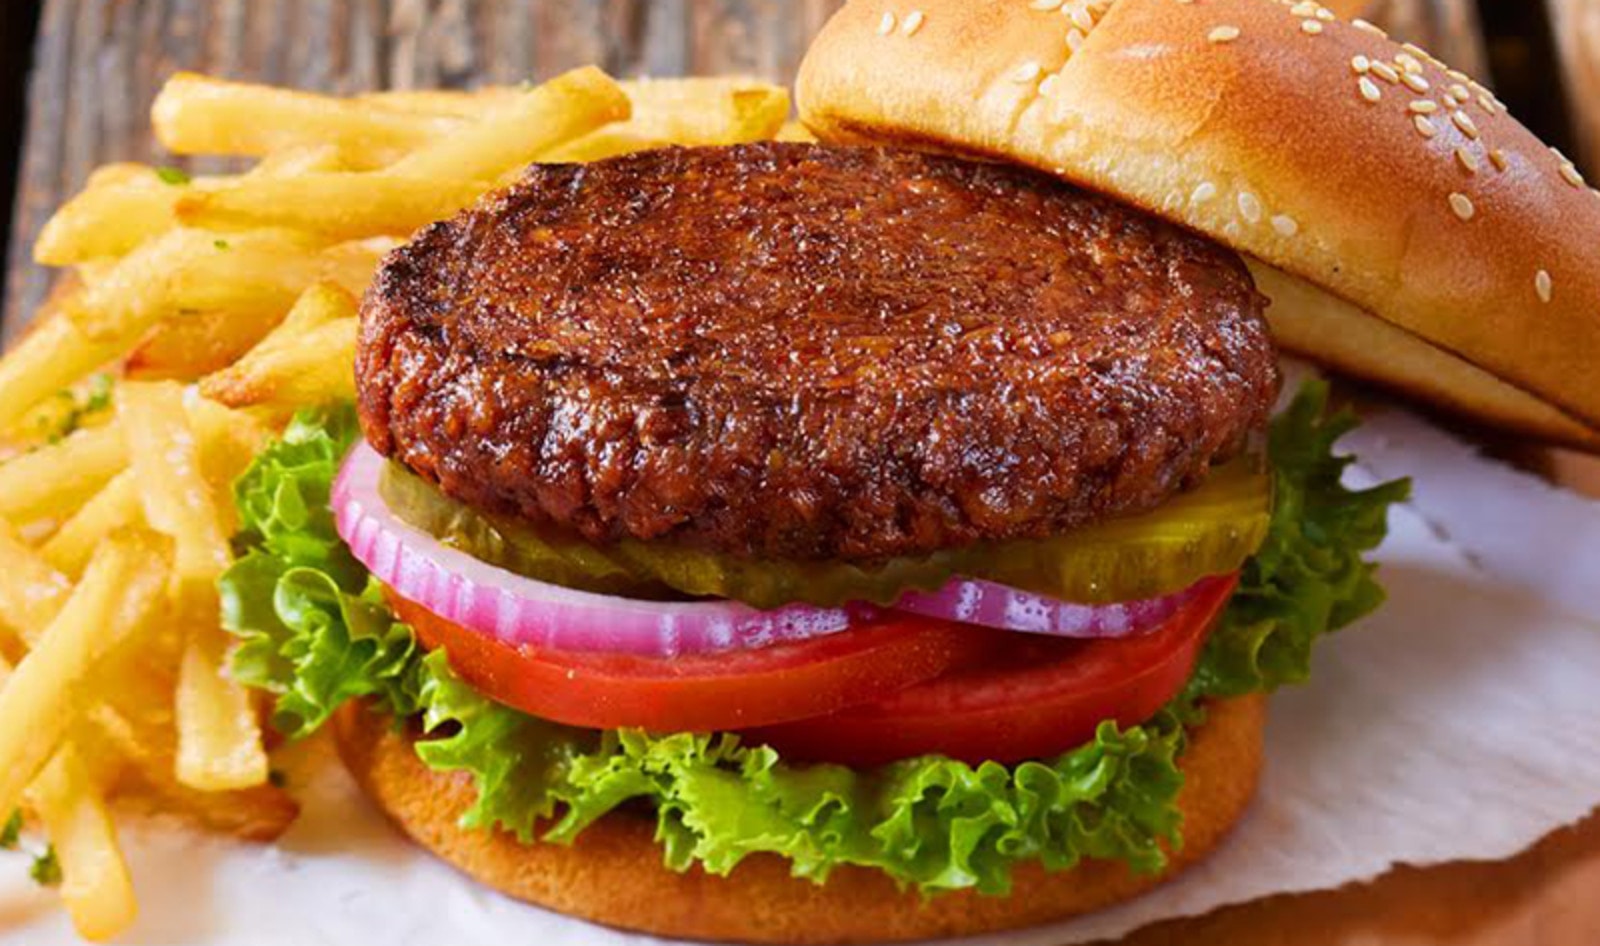 Costco’s Popular Vegan Burger Expands to 15 Countries